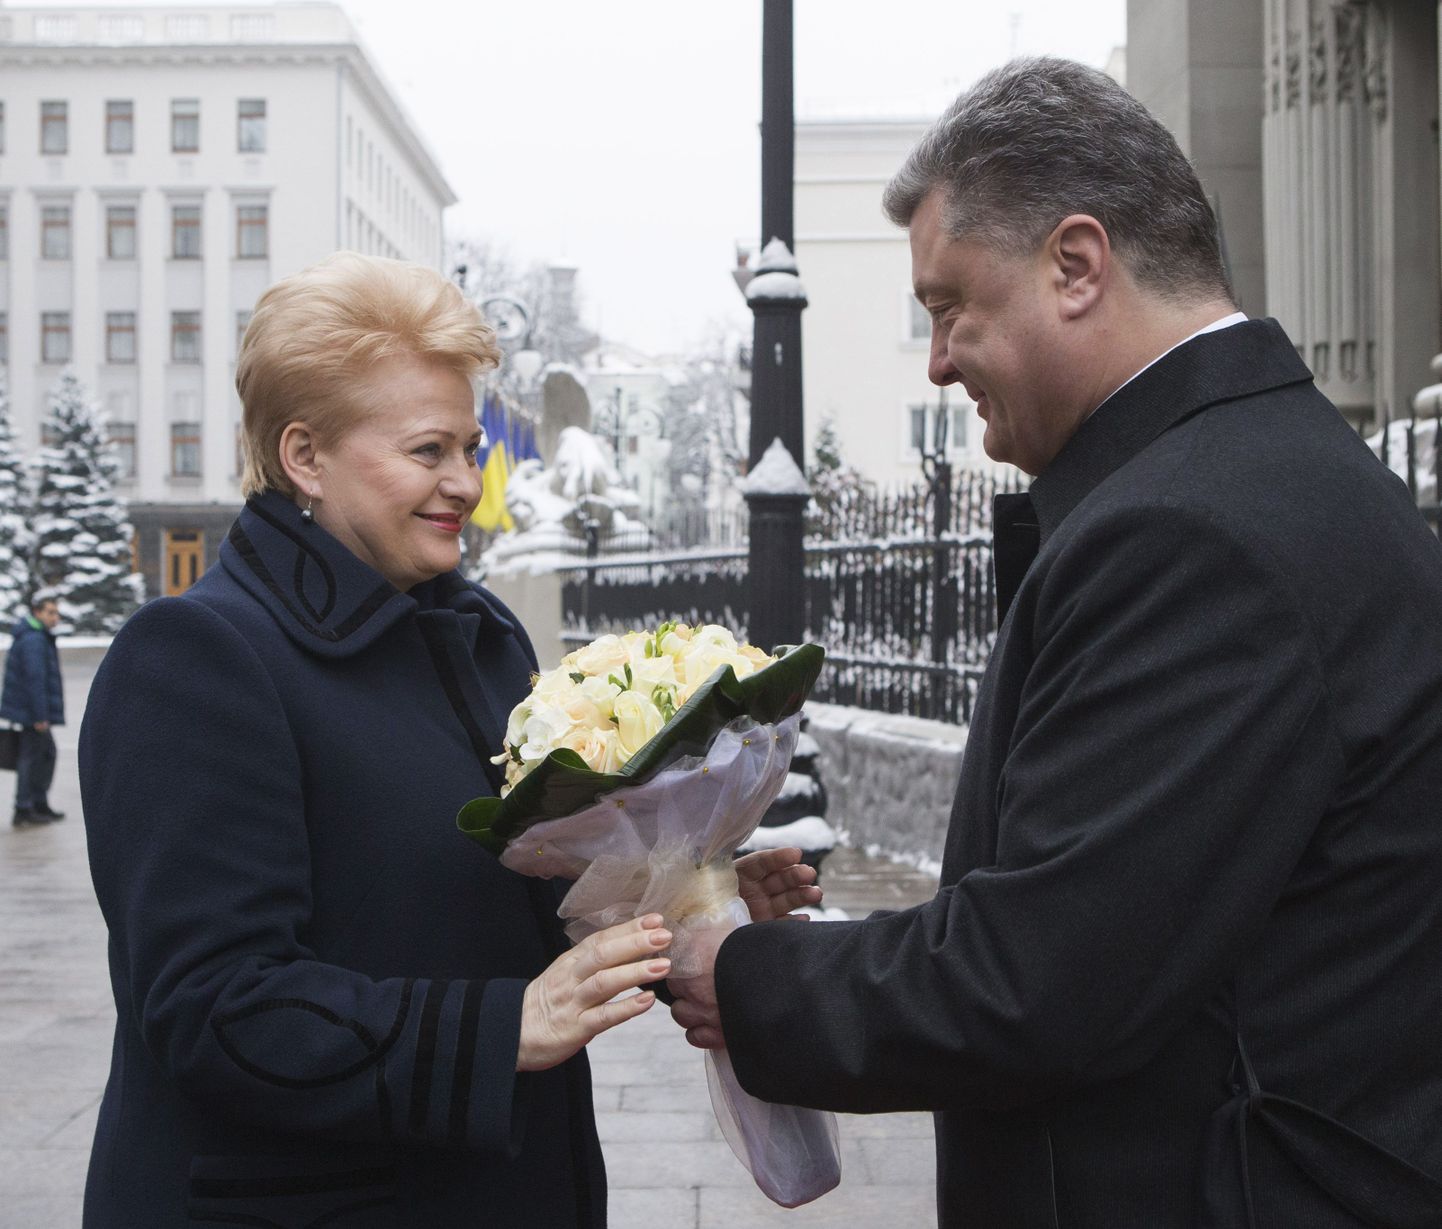 Leedu president Dalia Grybauskaitė kohtus täna Kiievis Ukraina presidendi Petro Porošenkoga.